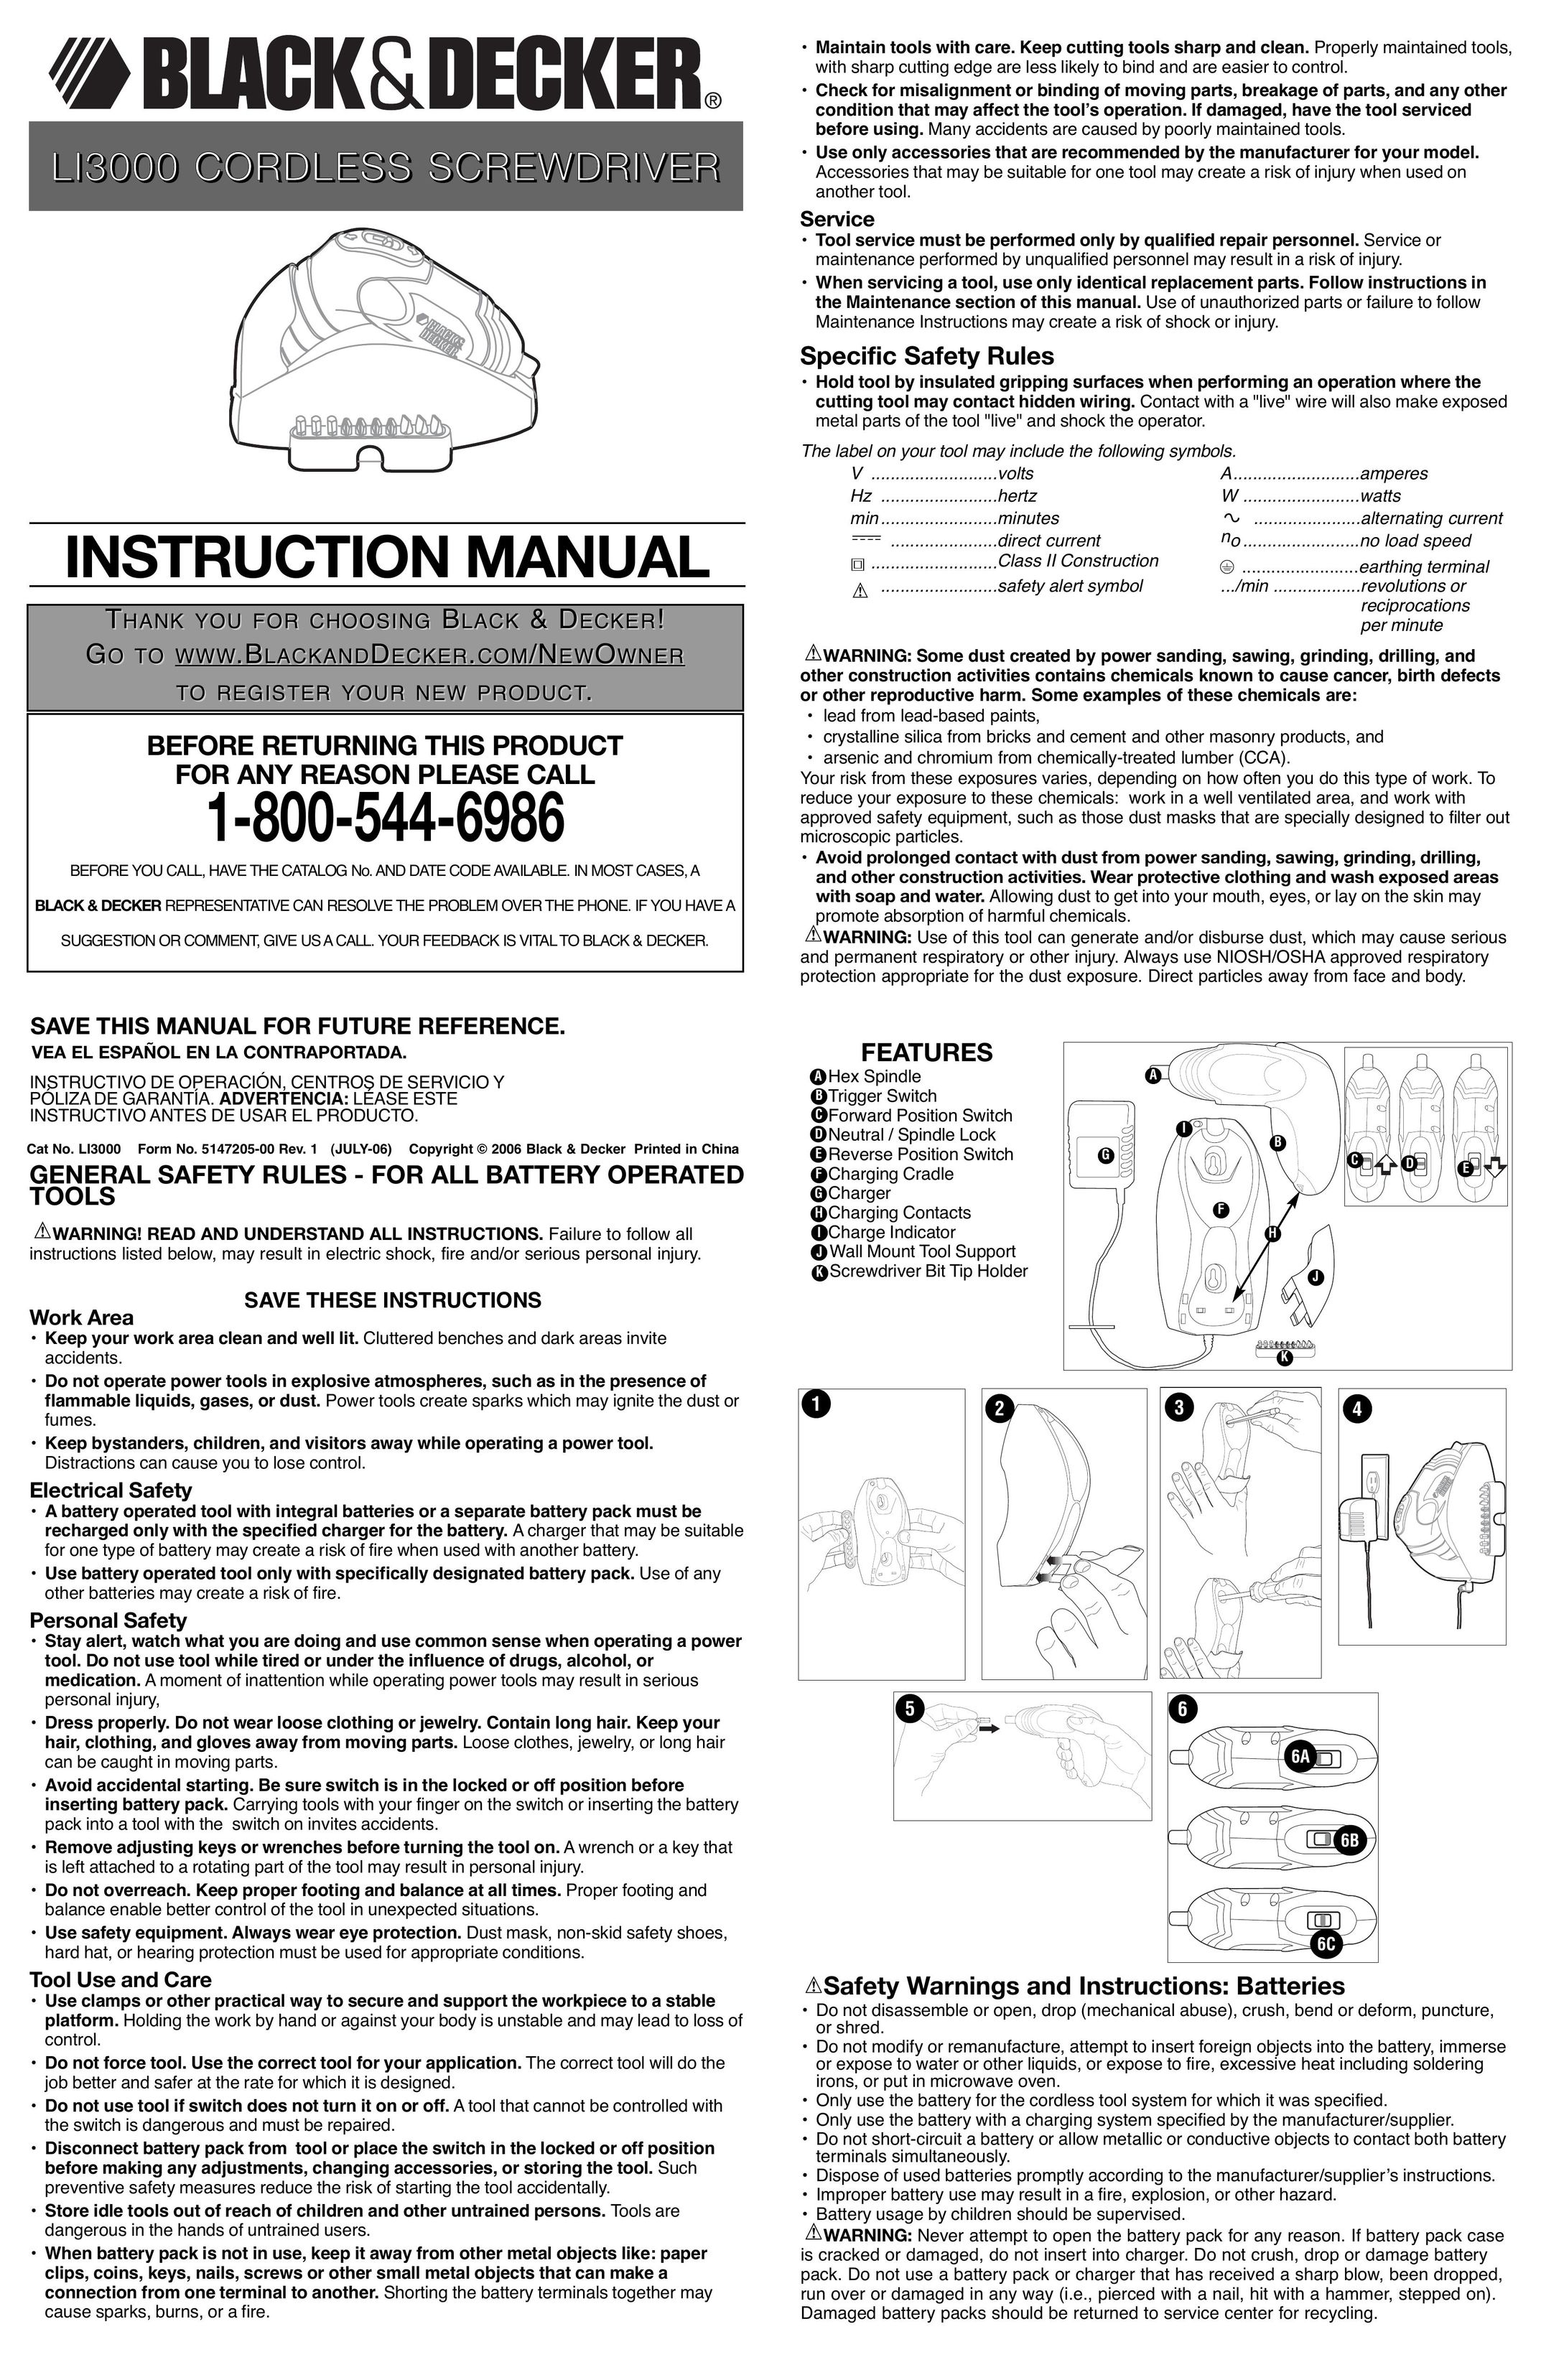 Black & Decker 5147205-00 Power Screwdriver User Manual